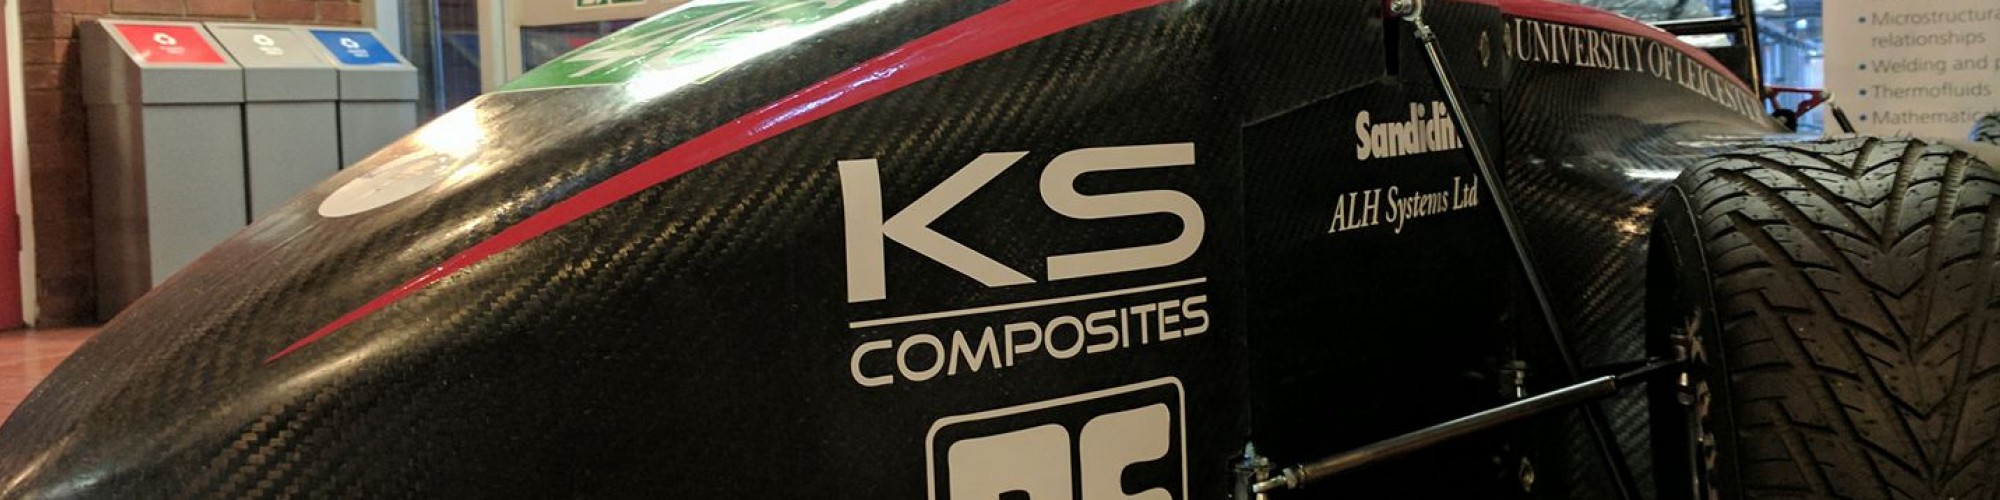 KS Composites  cover image